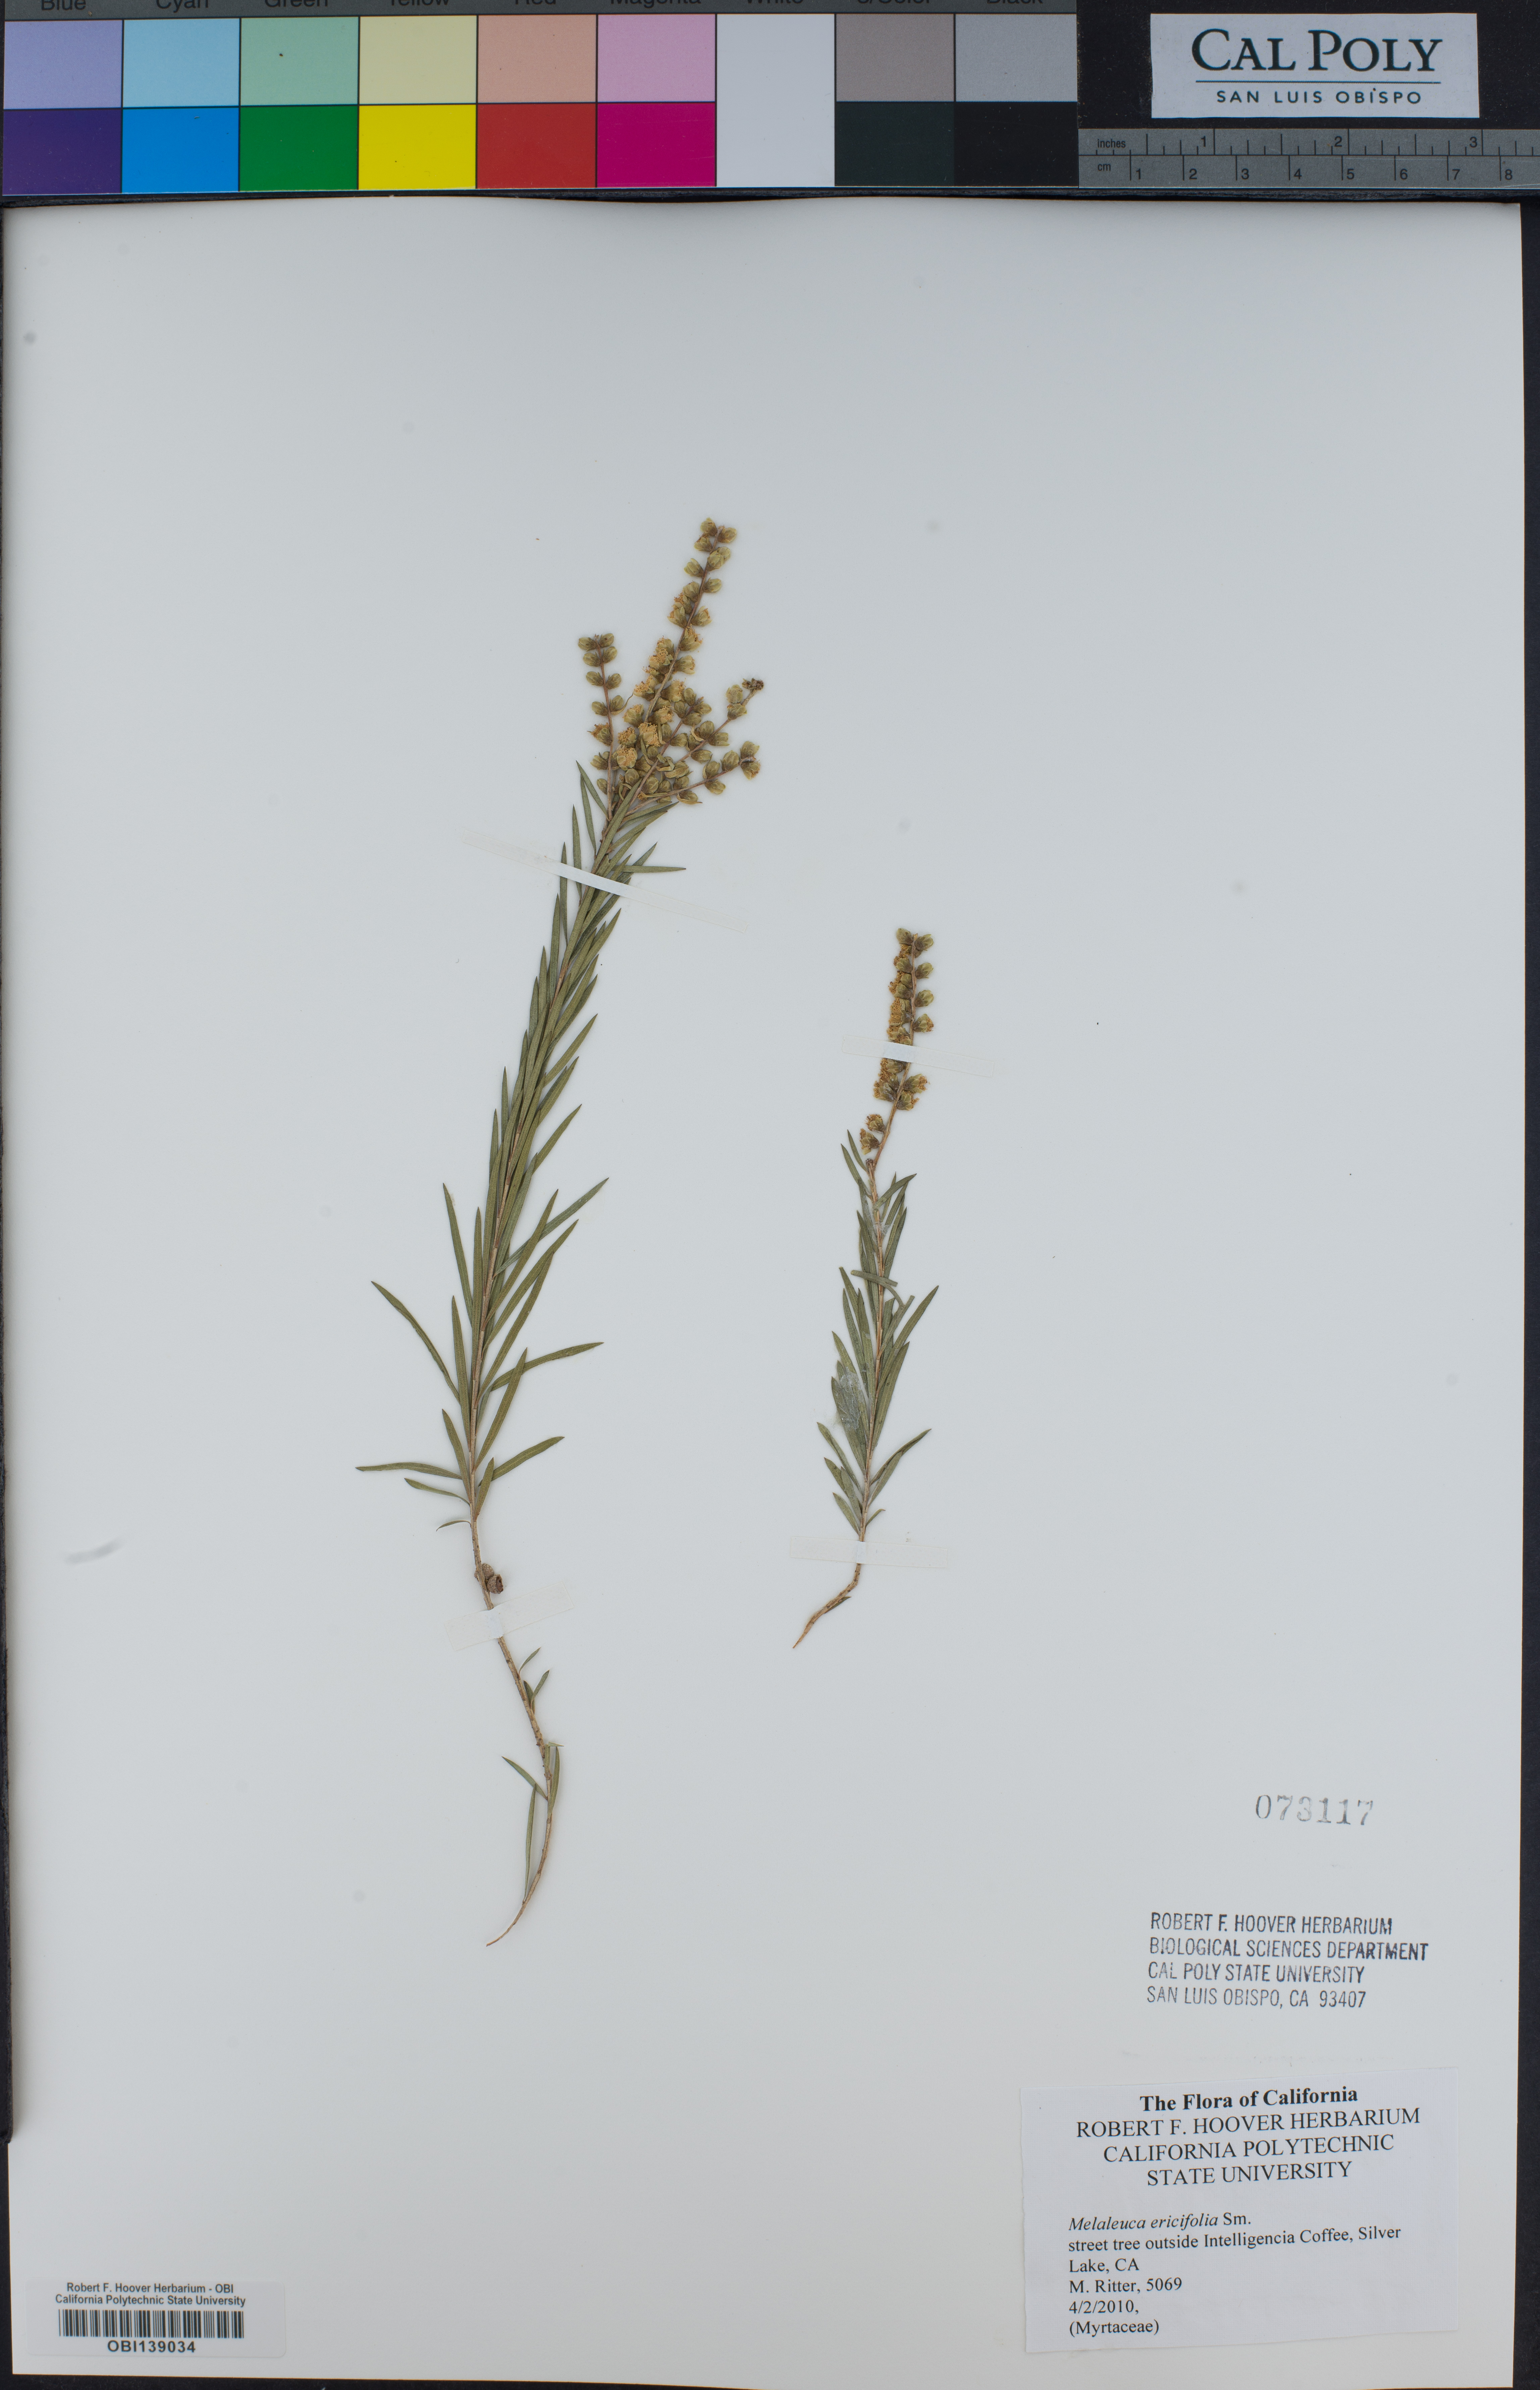 Melaleuca ericifolia image